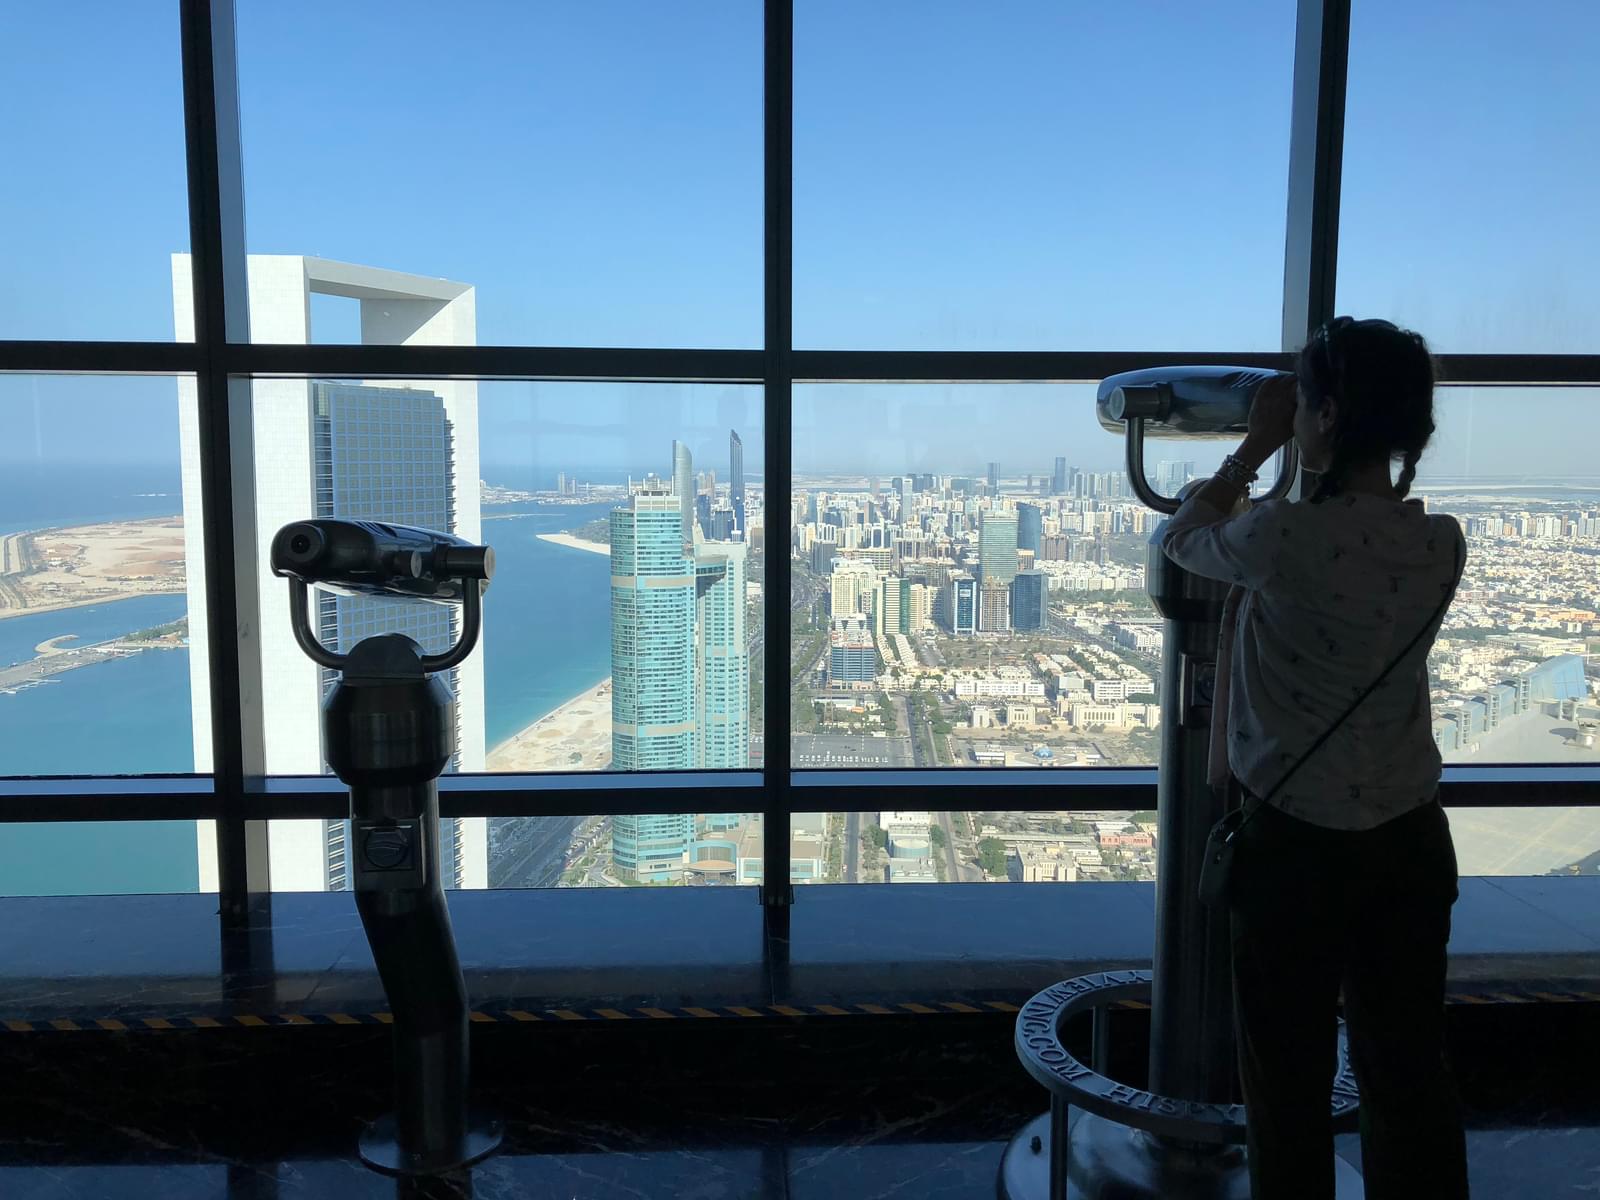 Use the telescopes to see Corniche and the Arabian Gulf